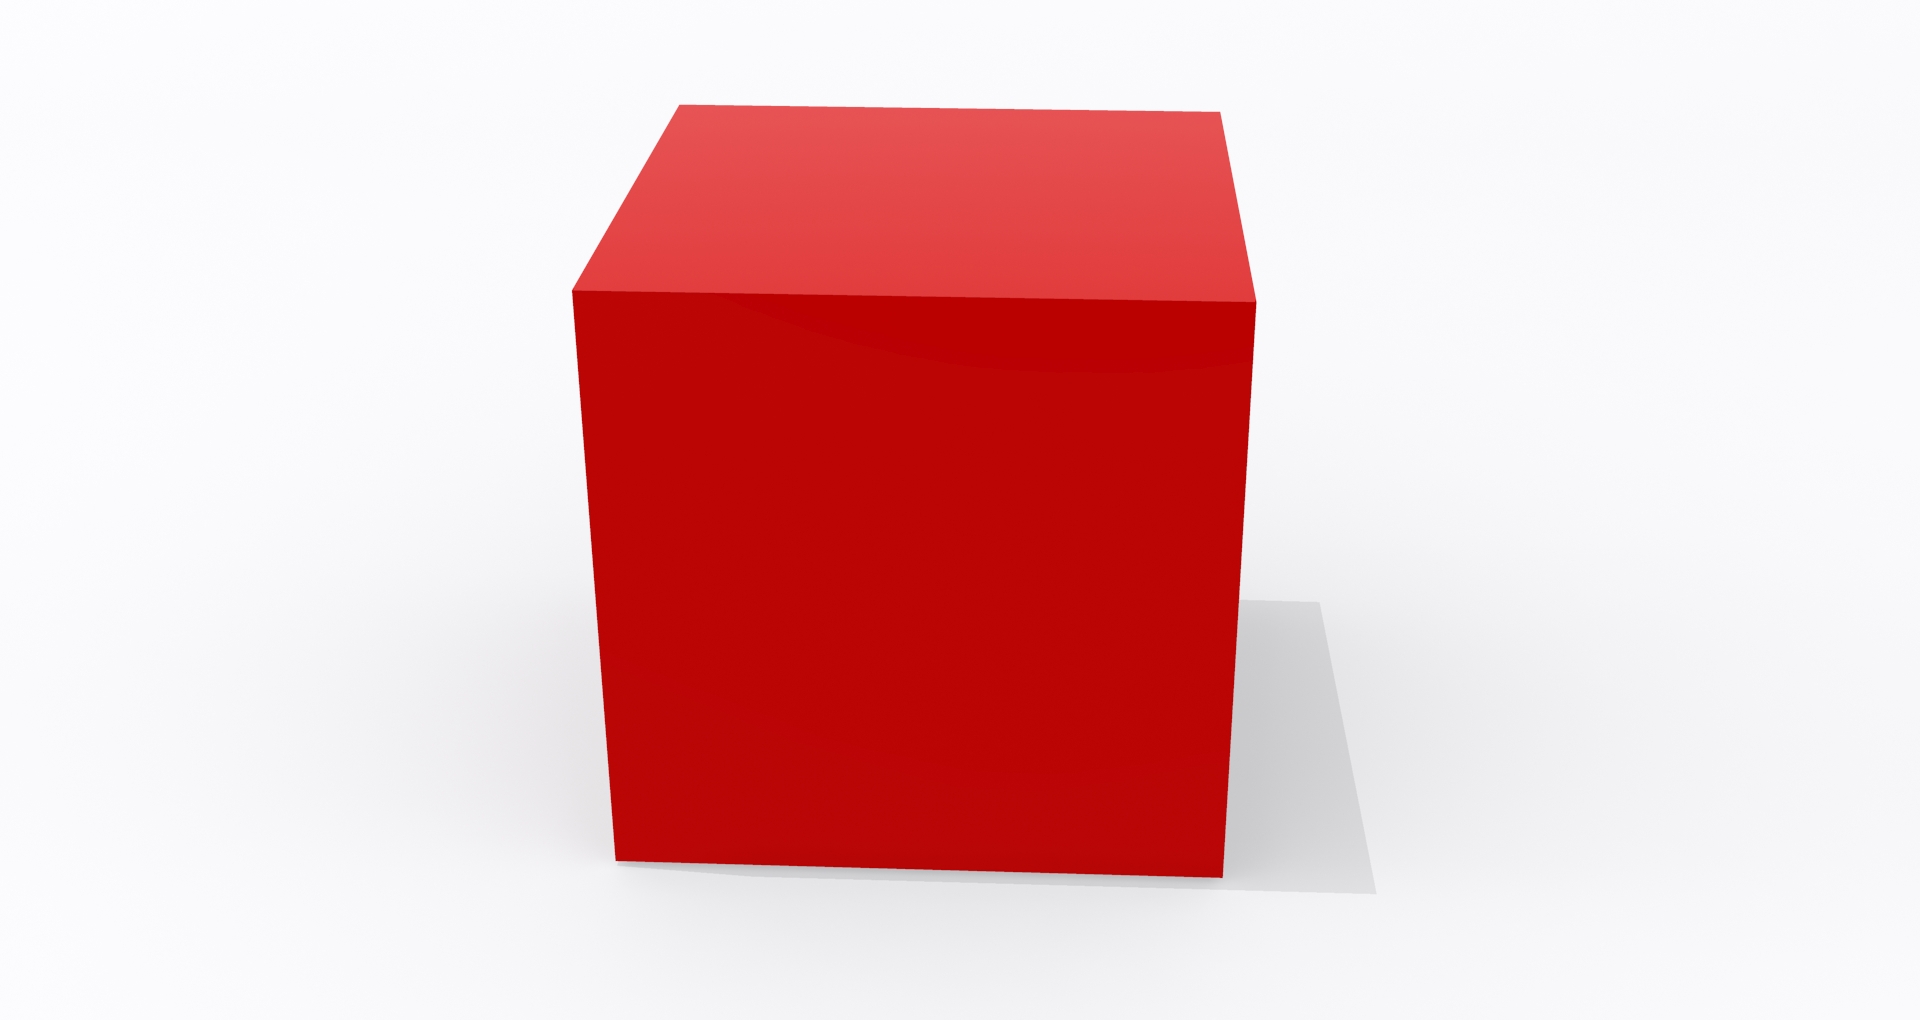 Https cub red download. Красный кубик. Куб на прозрачном фоне. Куб на белом фоне. Кубики на белом фоне.